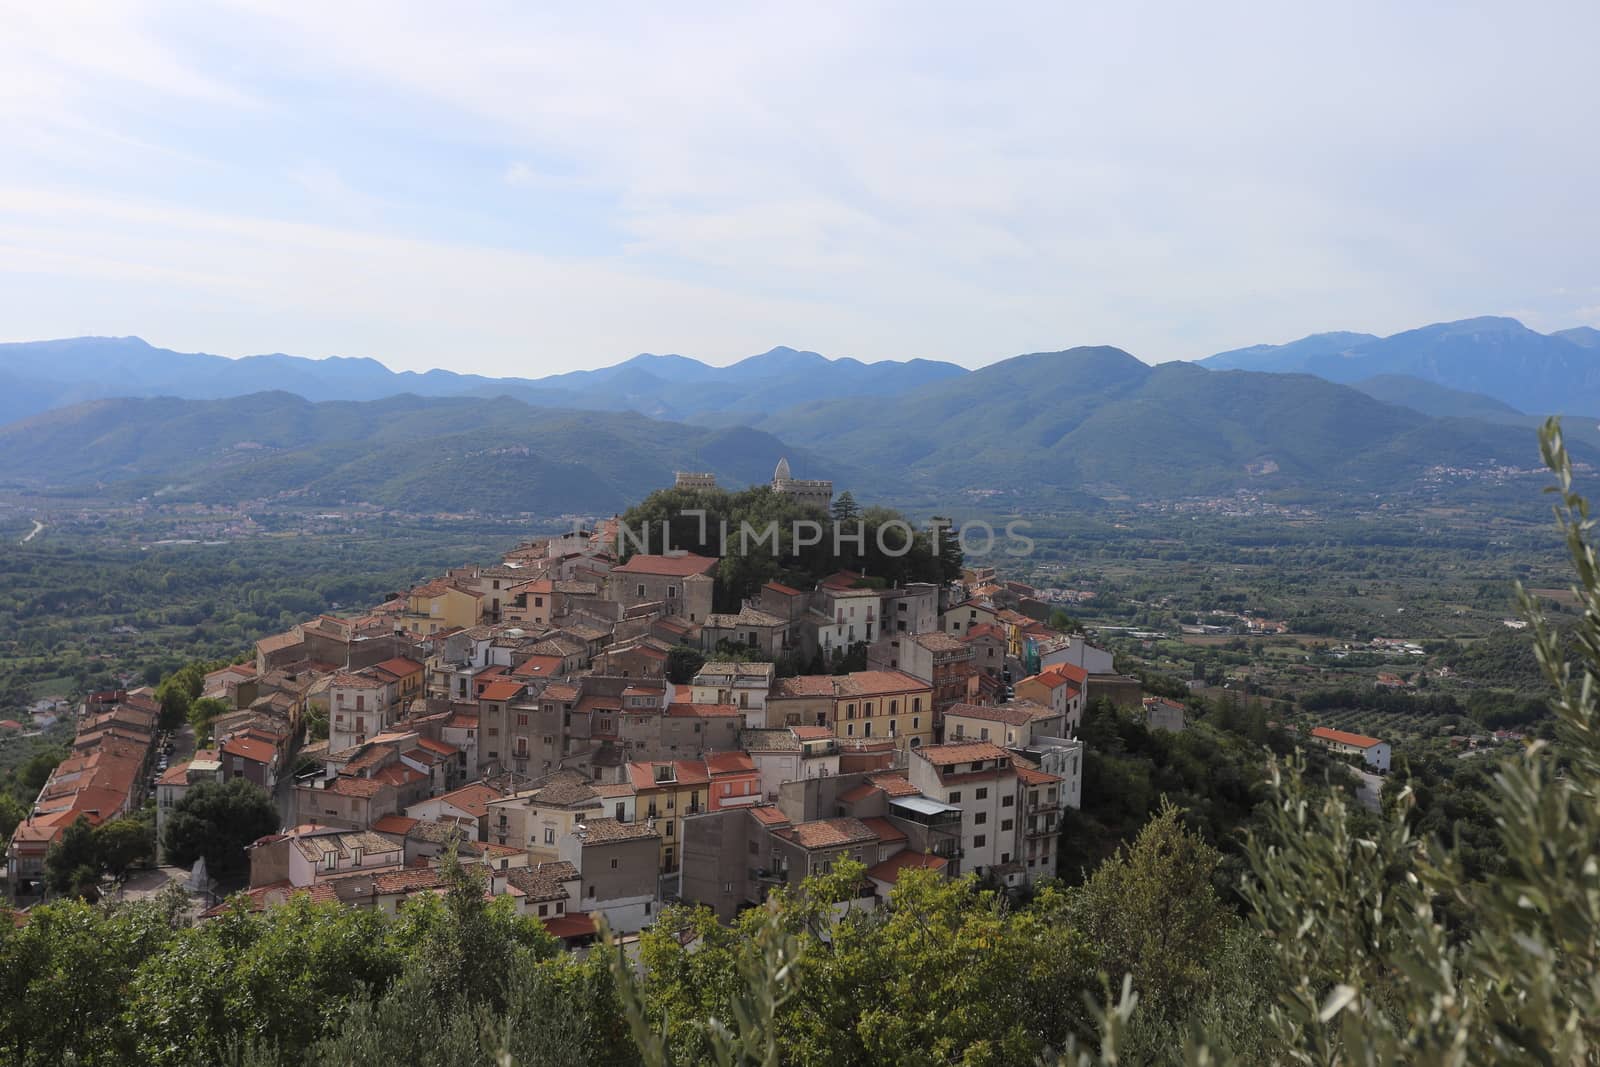 Monteroduni, Italy - September 15, 2019: The town of Monteroduni and view of the Pignatelli Castle